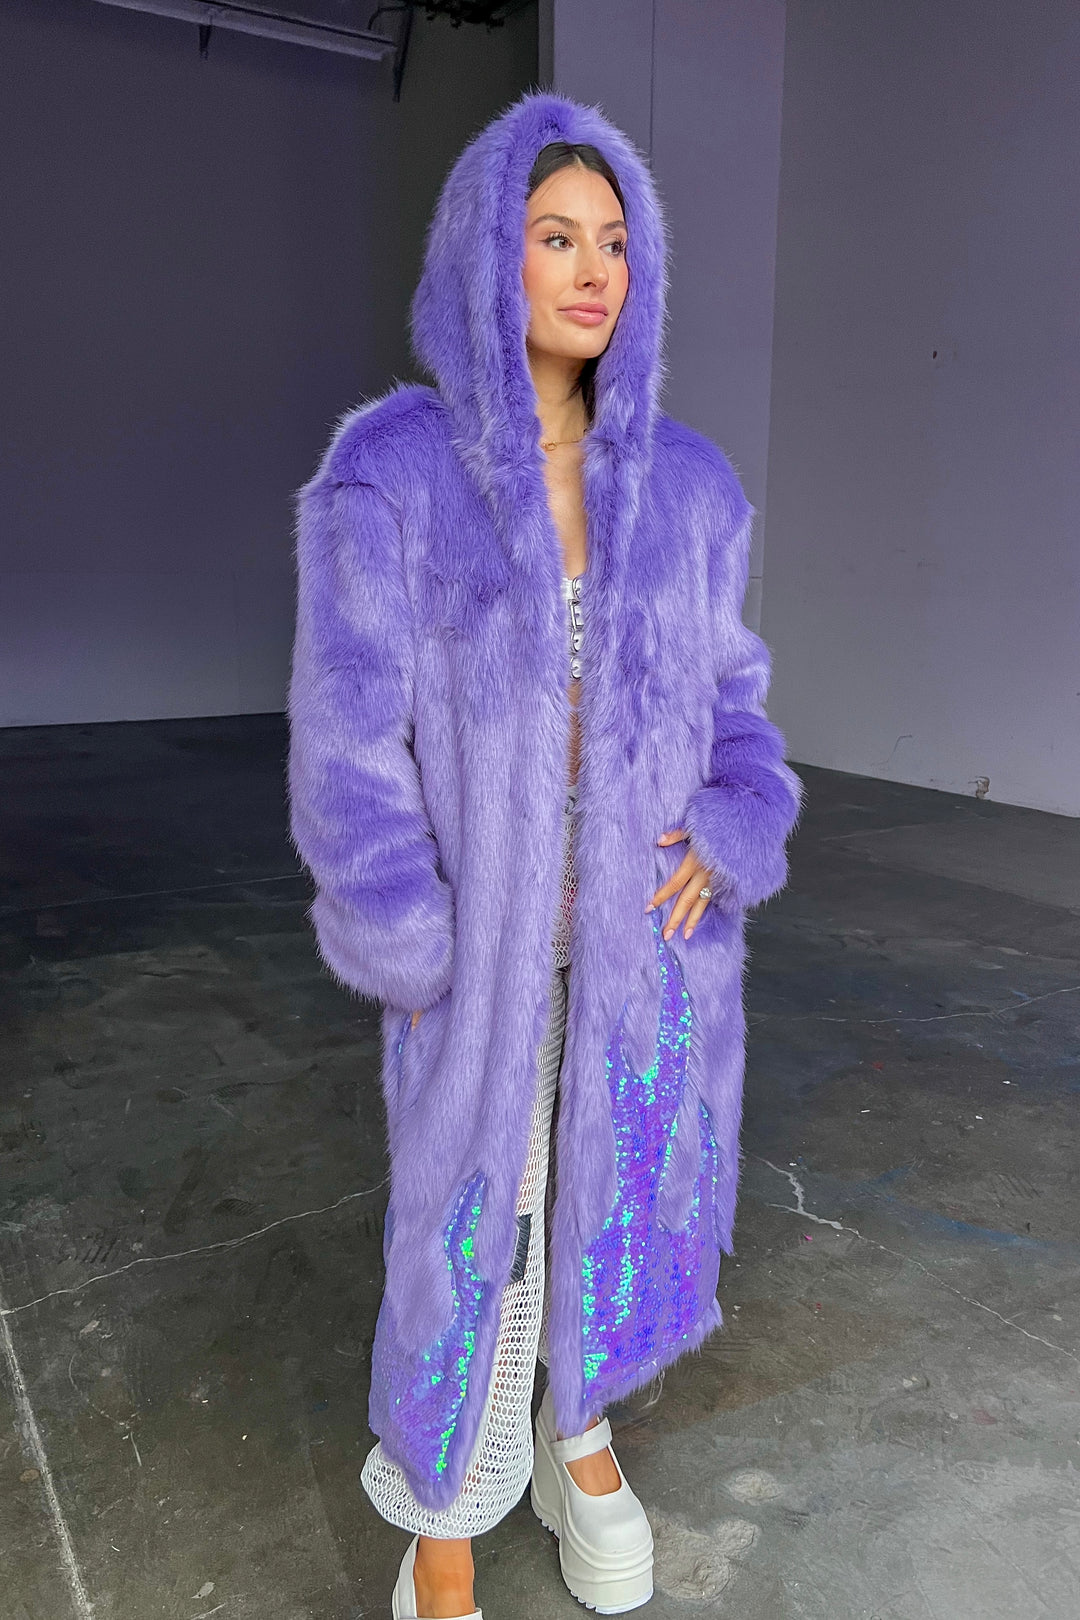 Amethyst Glow Up Fur Coat